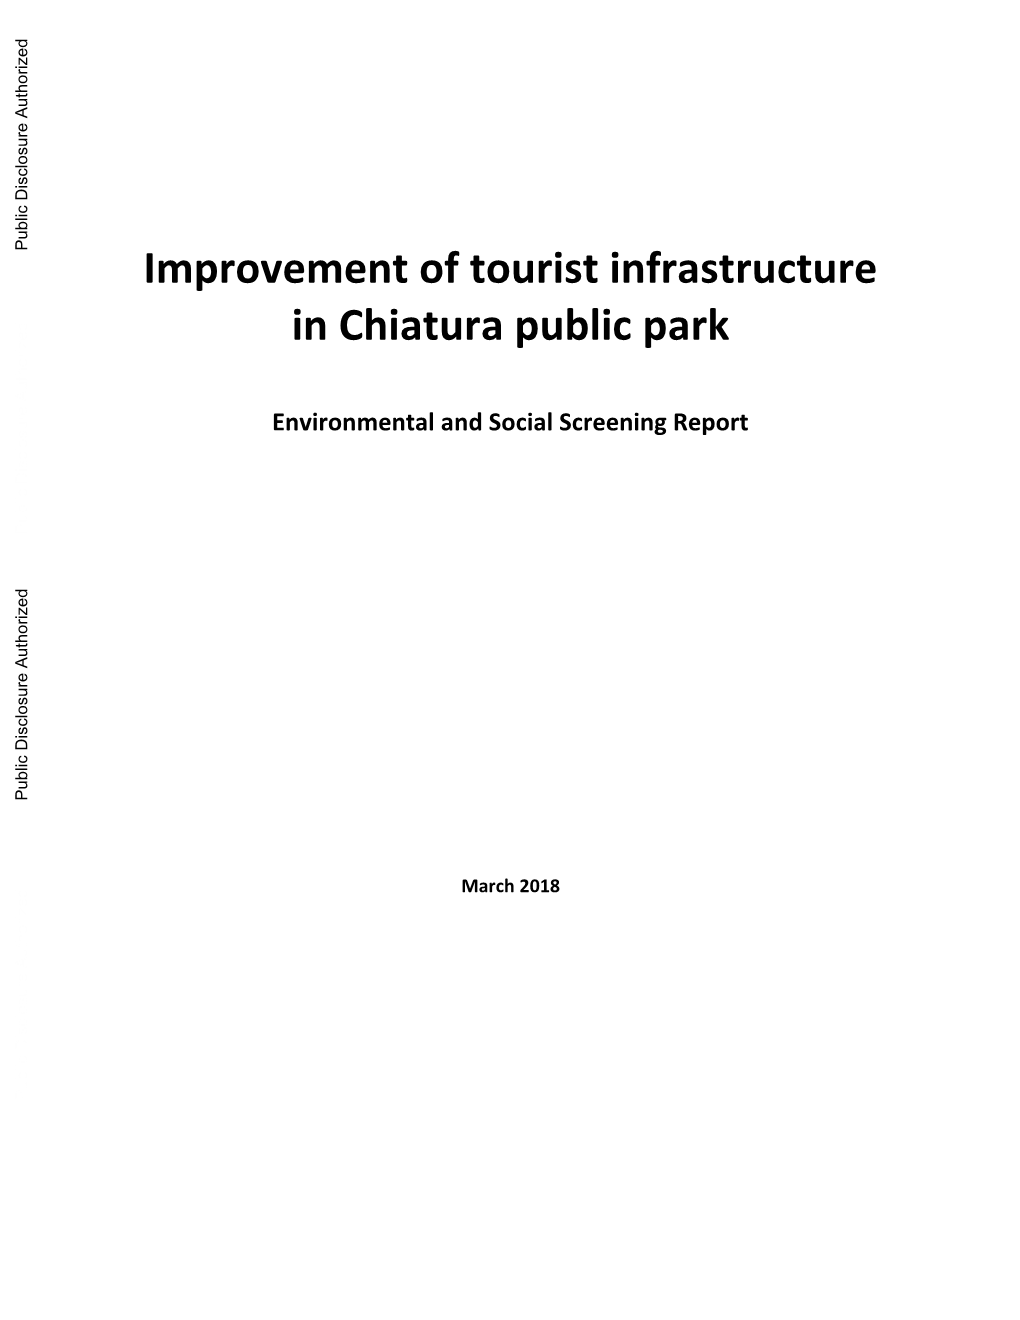 Improvement of Tourist Infrastructure in Chiatura Public Park